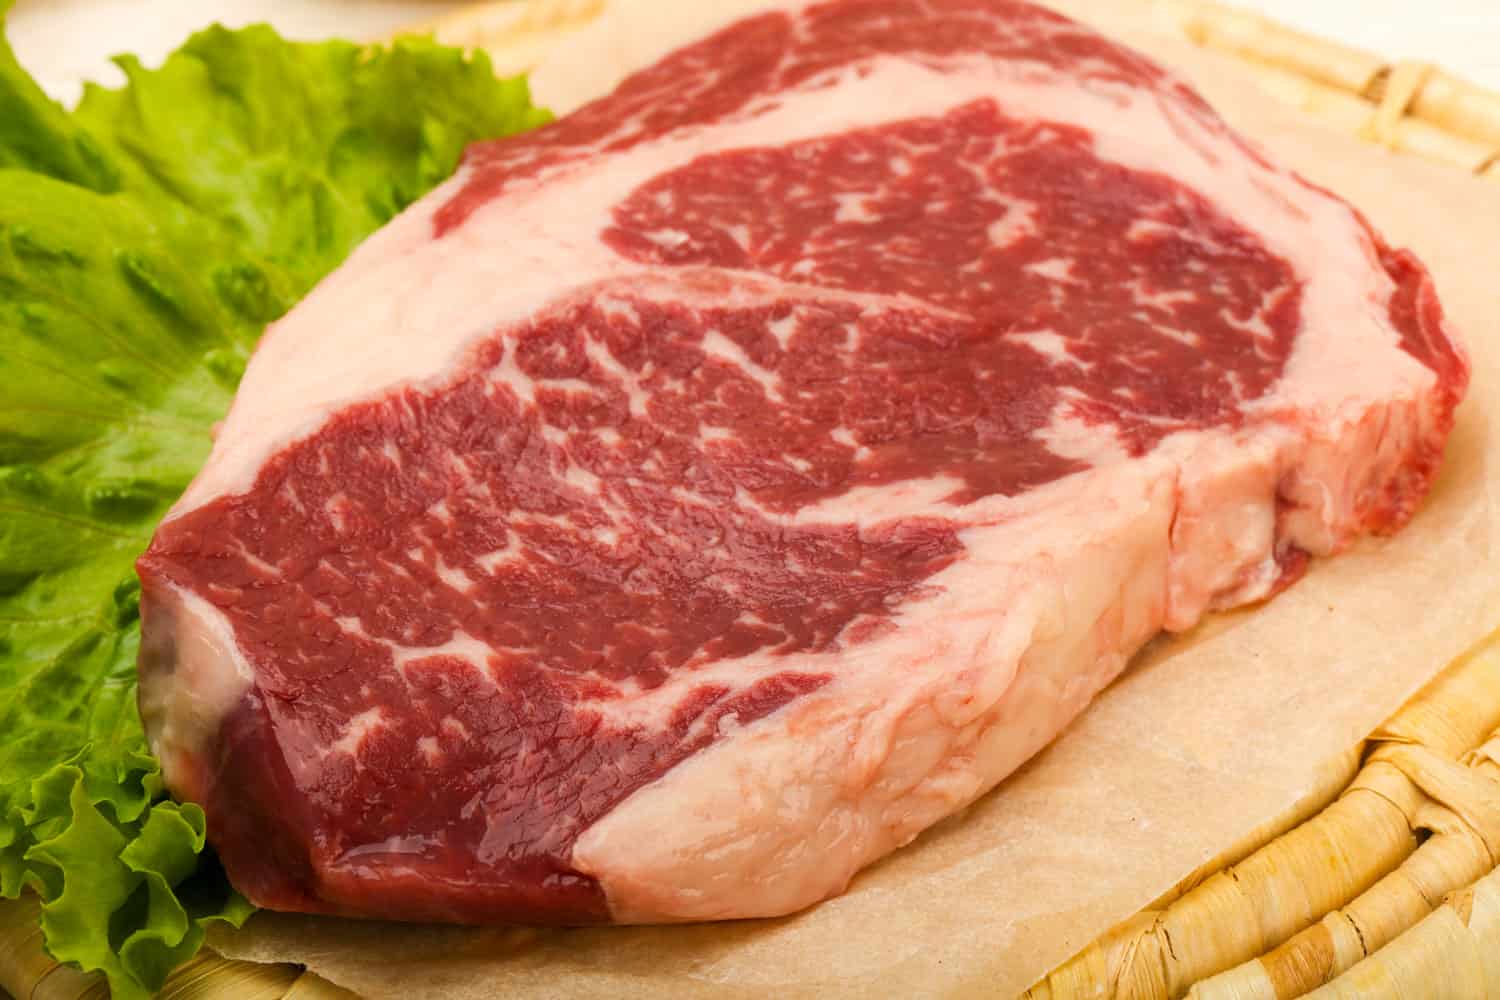 Rib eye raw steak ready for cooking